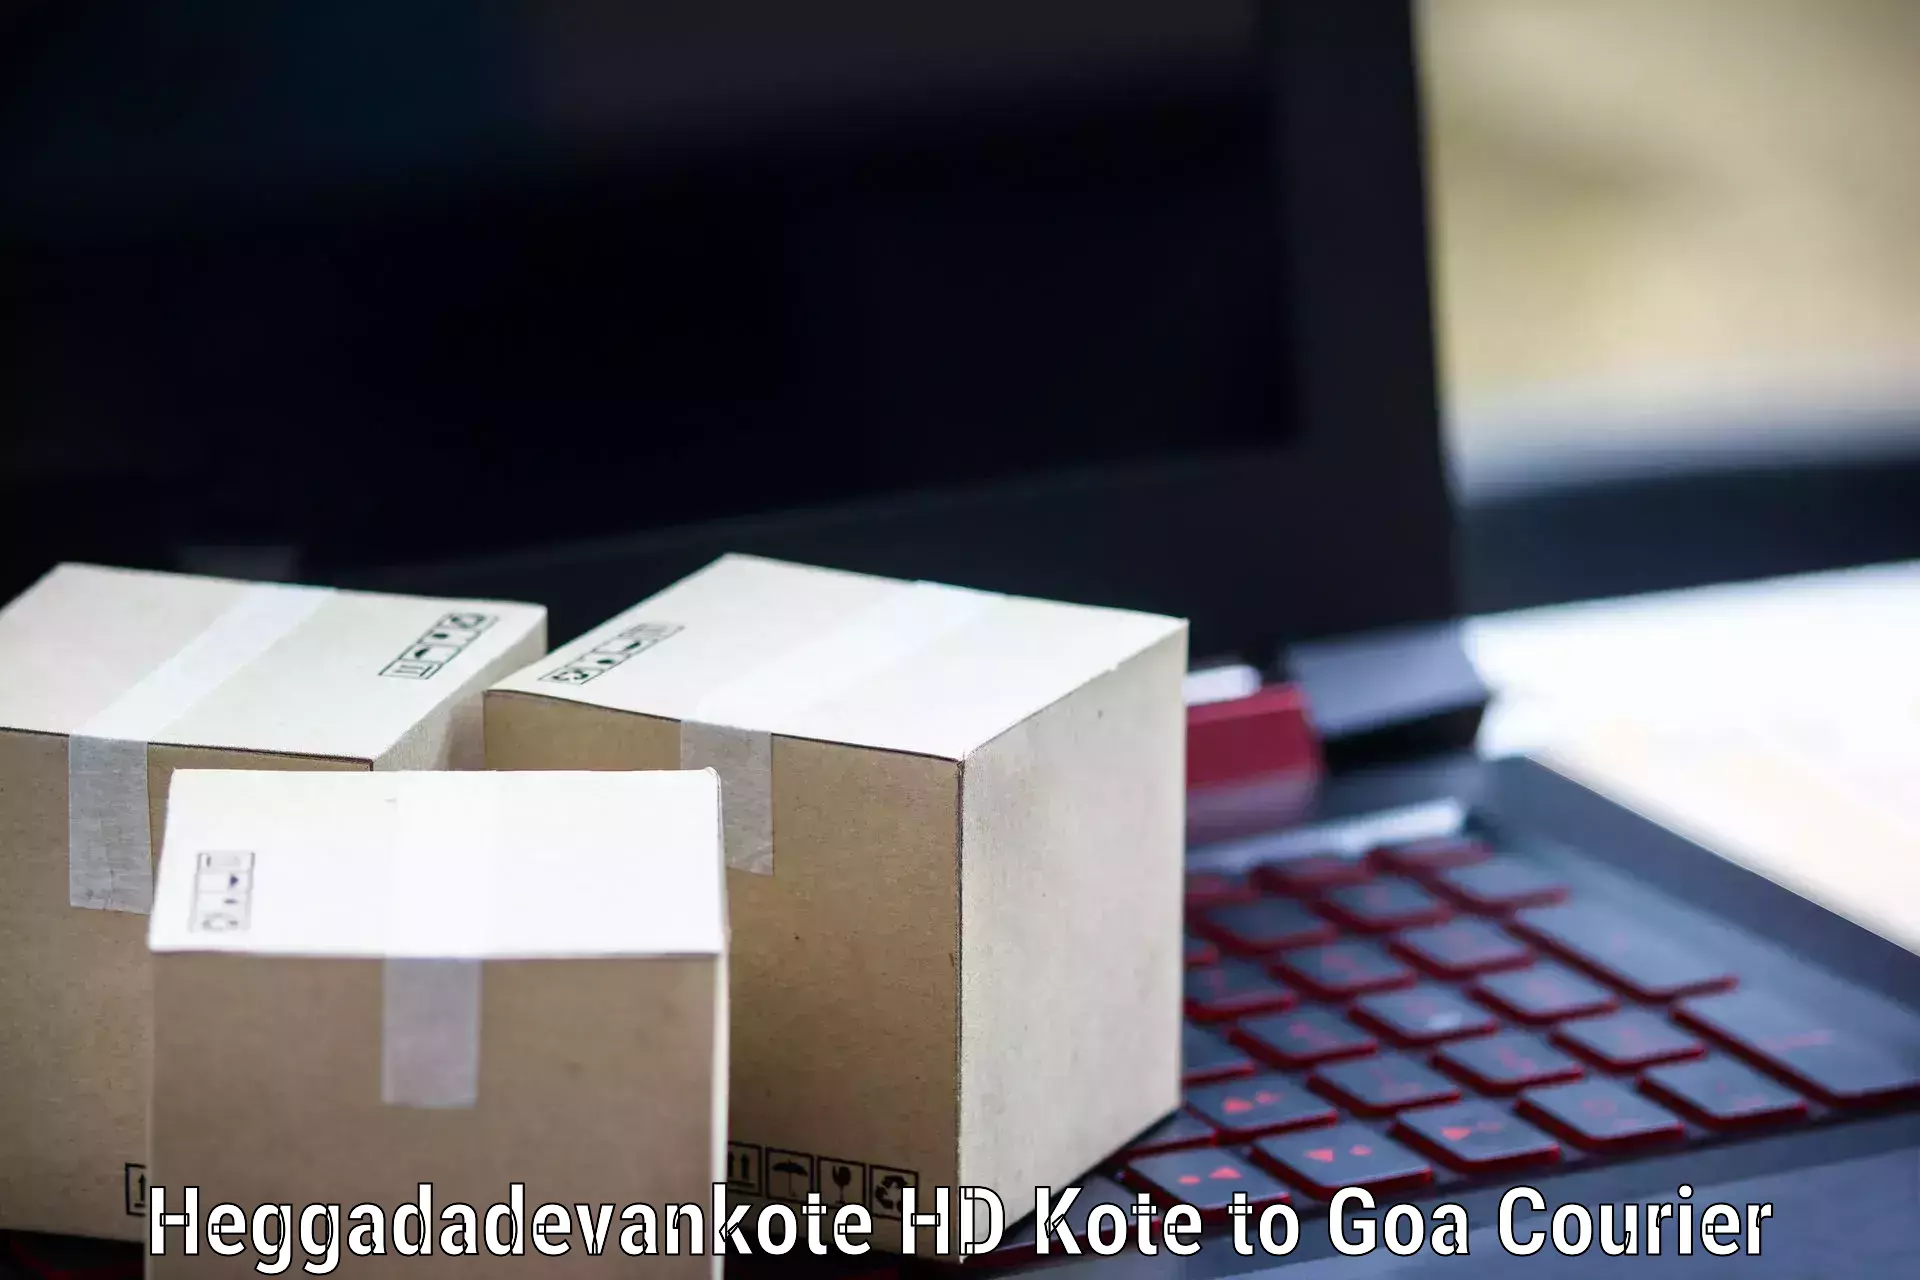 Business logistics support Heggadadevankote HD Kote to South Goa